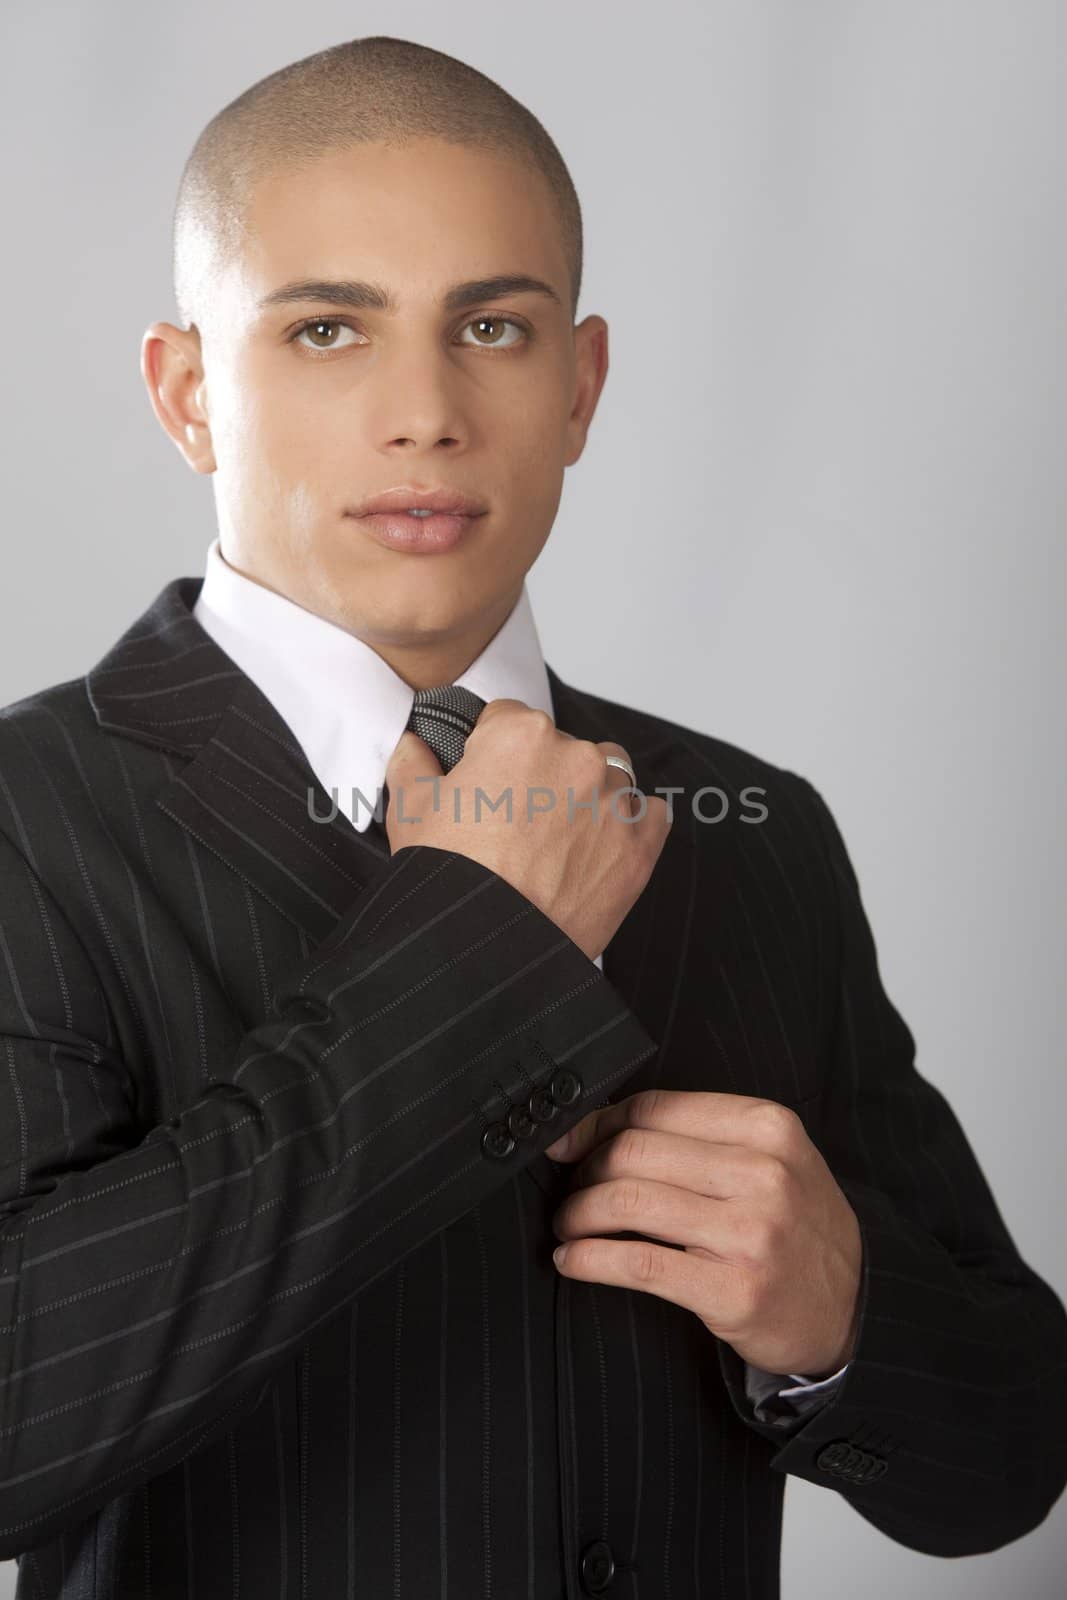 Good Looking Businessman on Gray by Daniel_Wiedemann